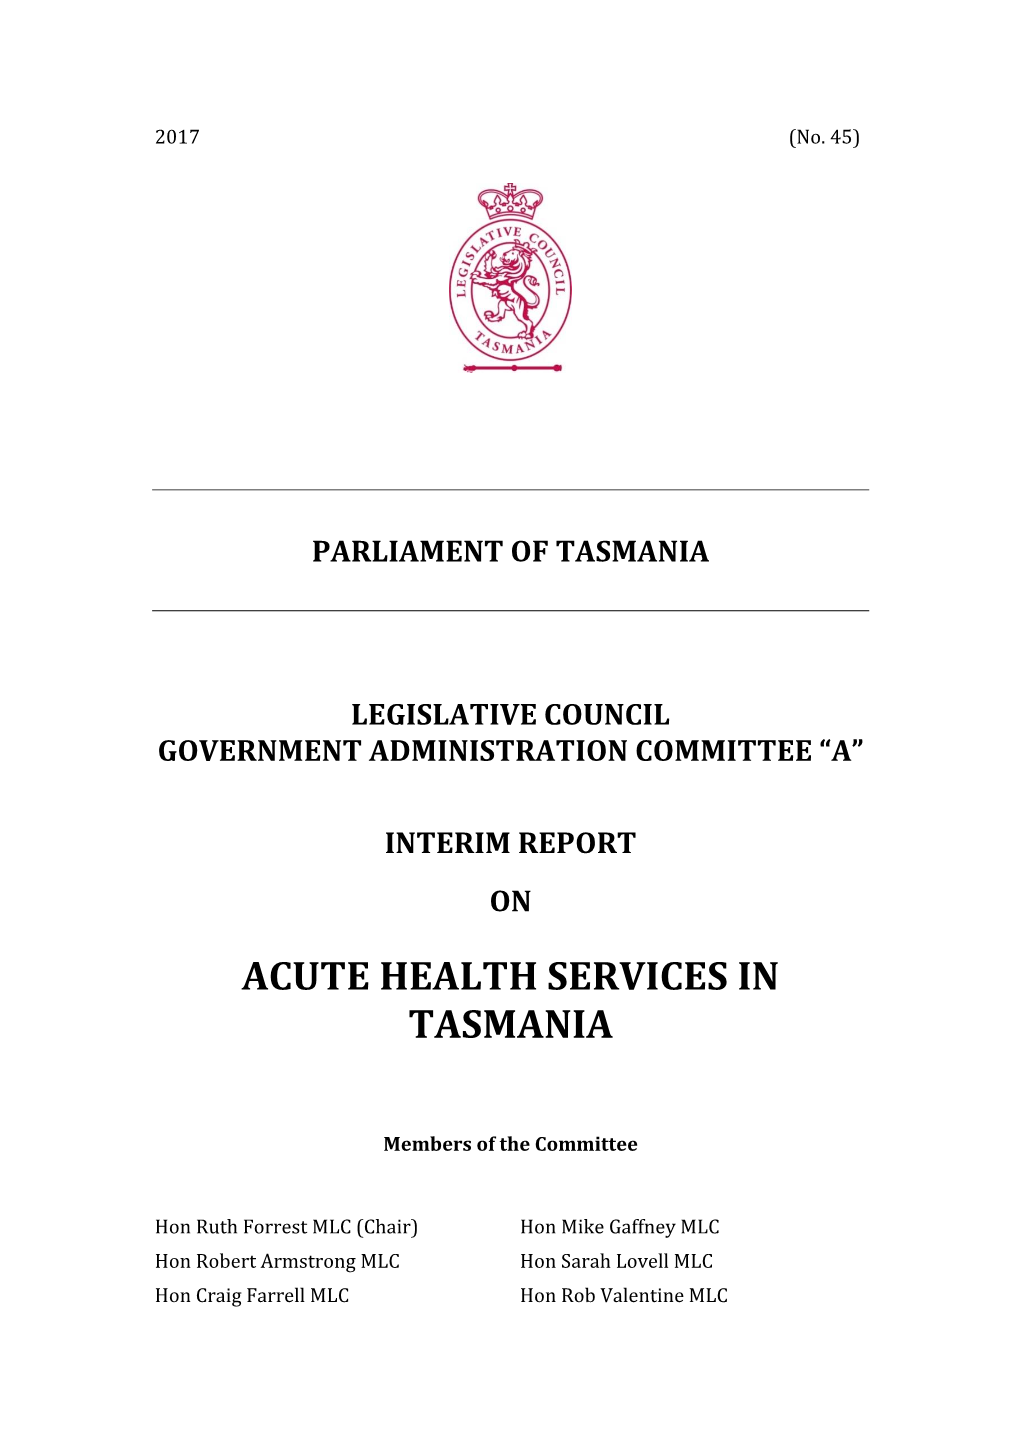 Acute Health Services in Tasmania